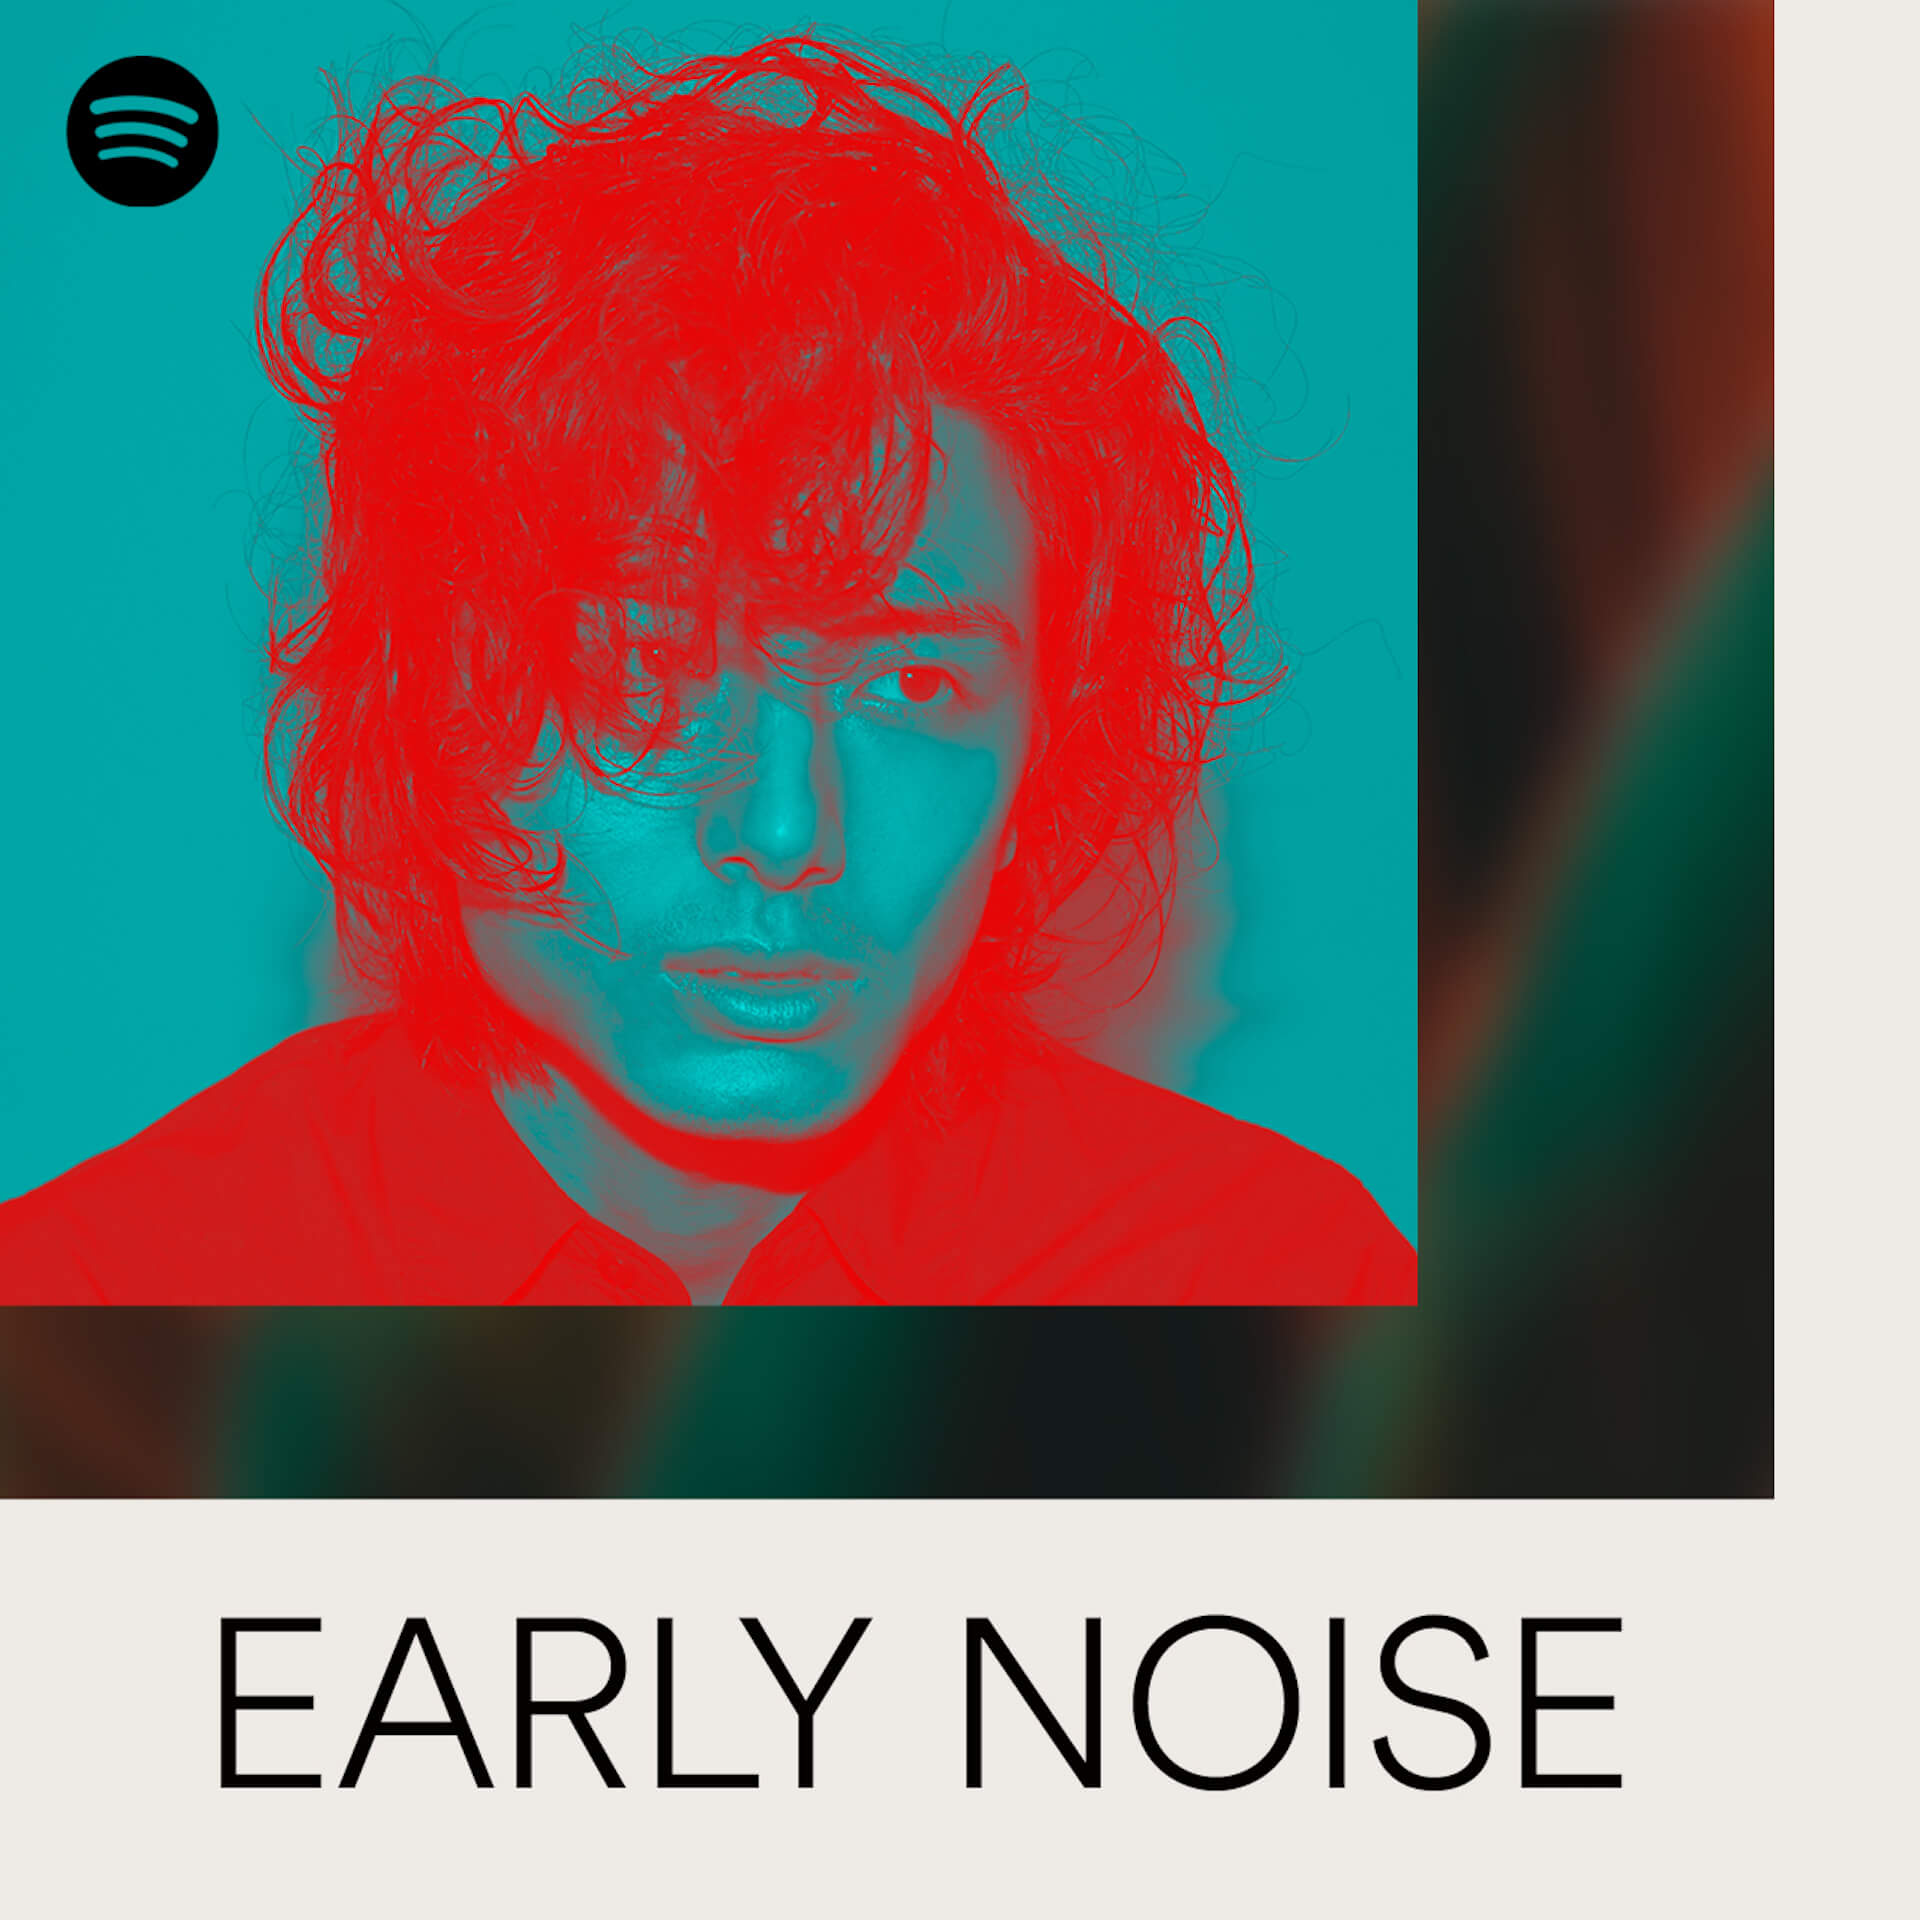 SpotifyがVaundy、Rina Sawayama、藤井 風などが選出されたプログラム『Early Noise』のコーナーを新たに開設！オリジナルプレイリストなども展開 music2020918-spotify2